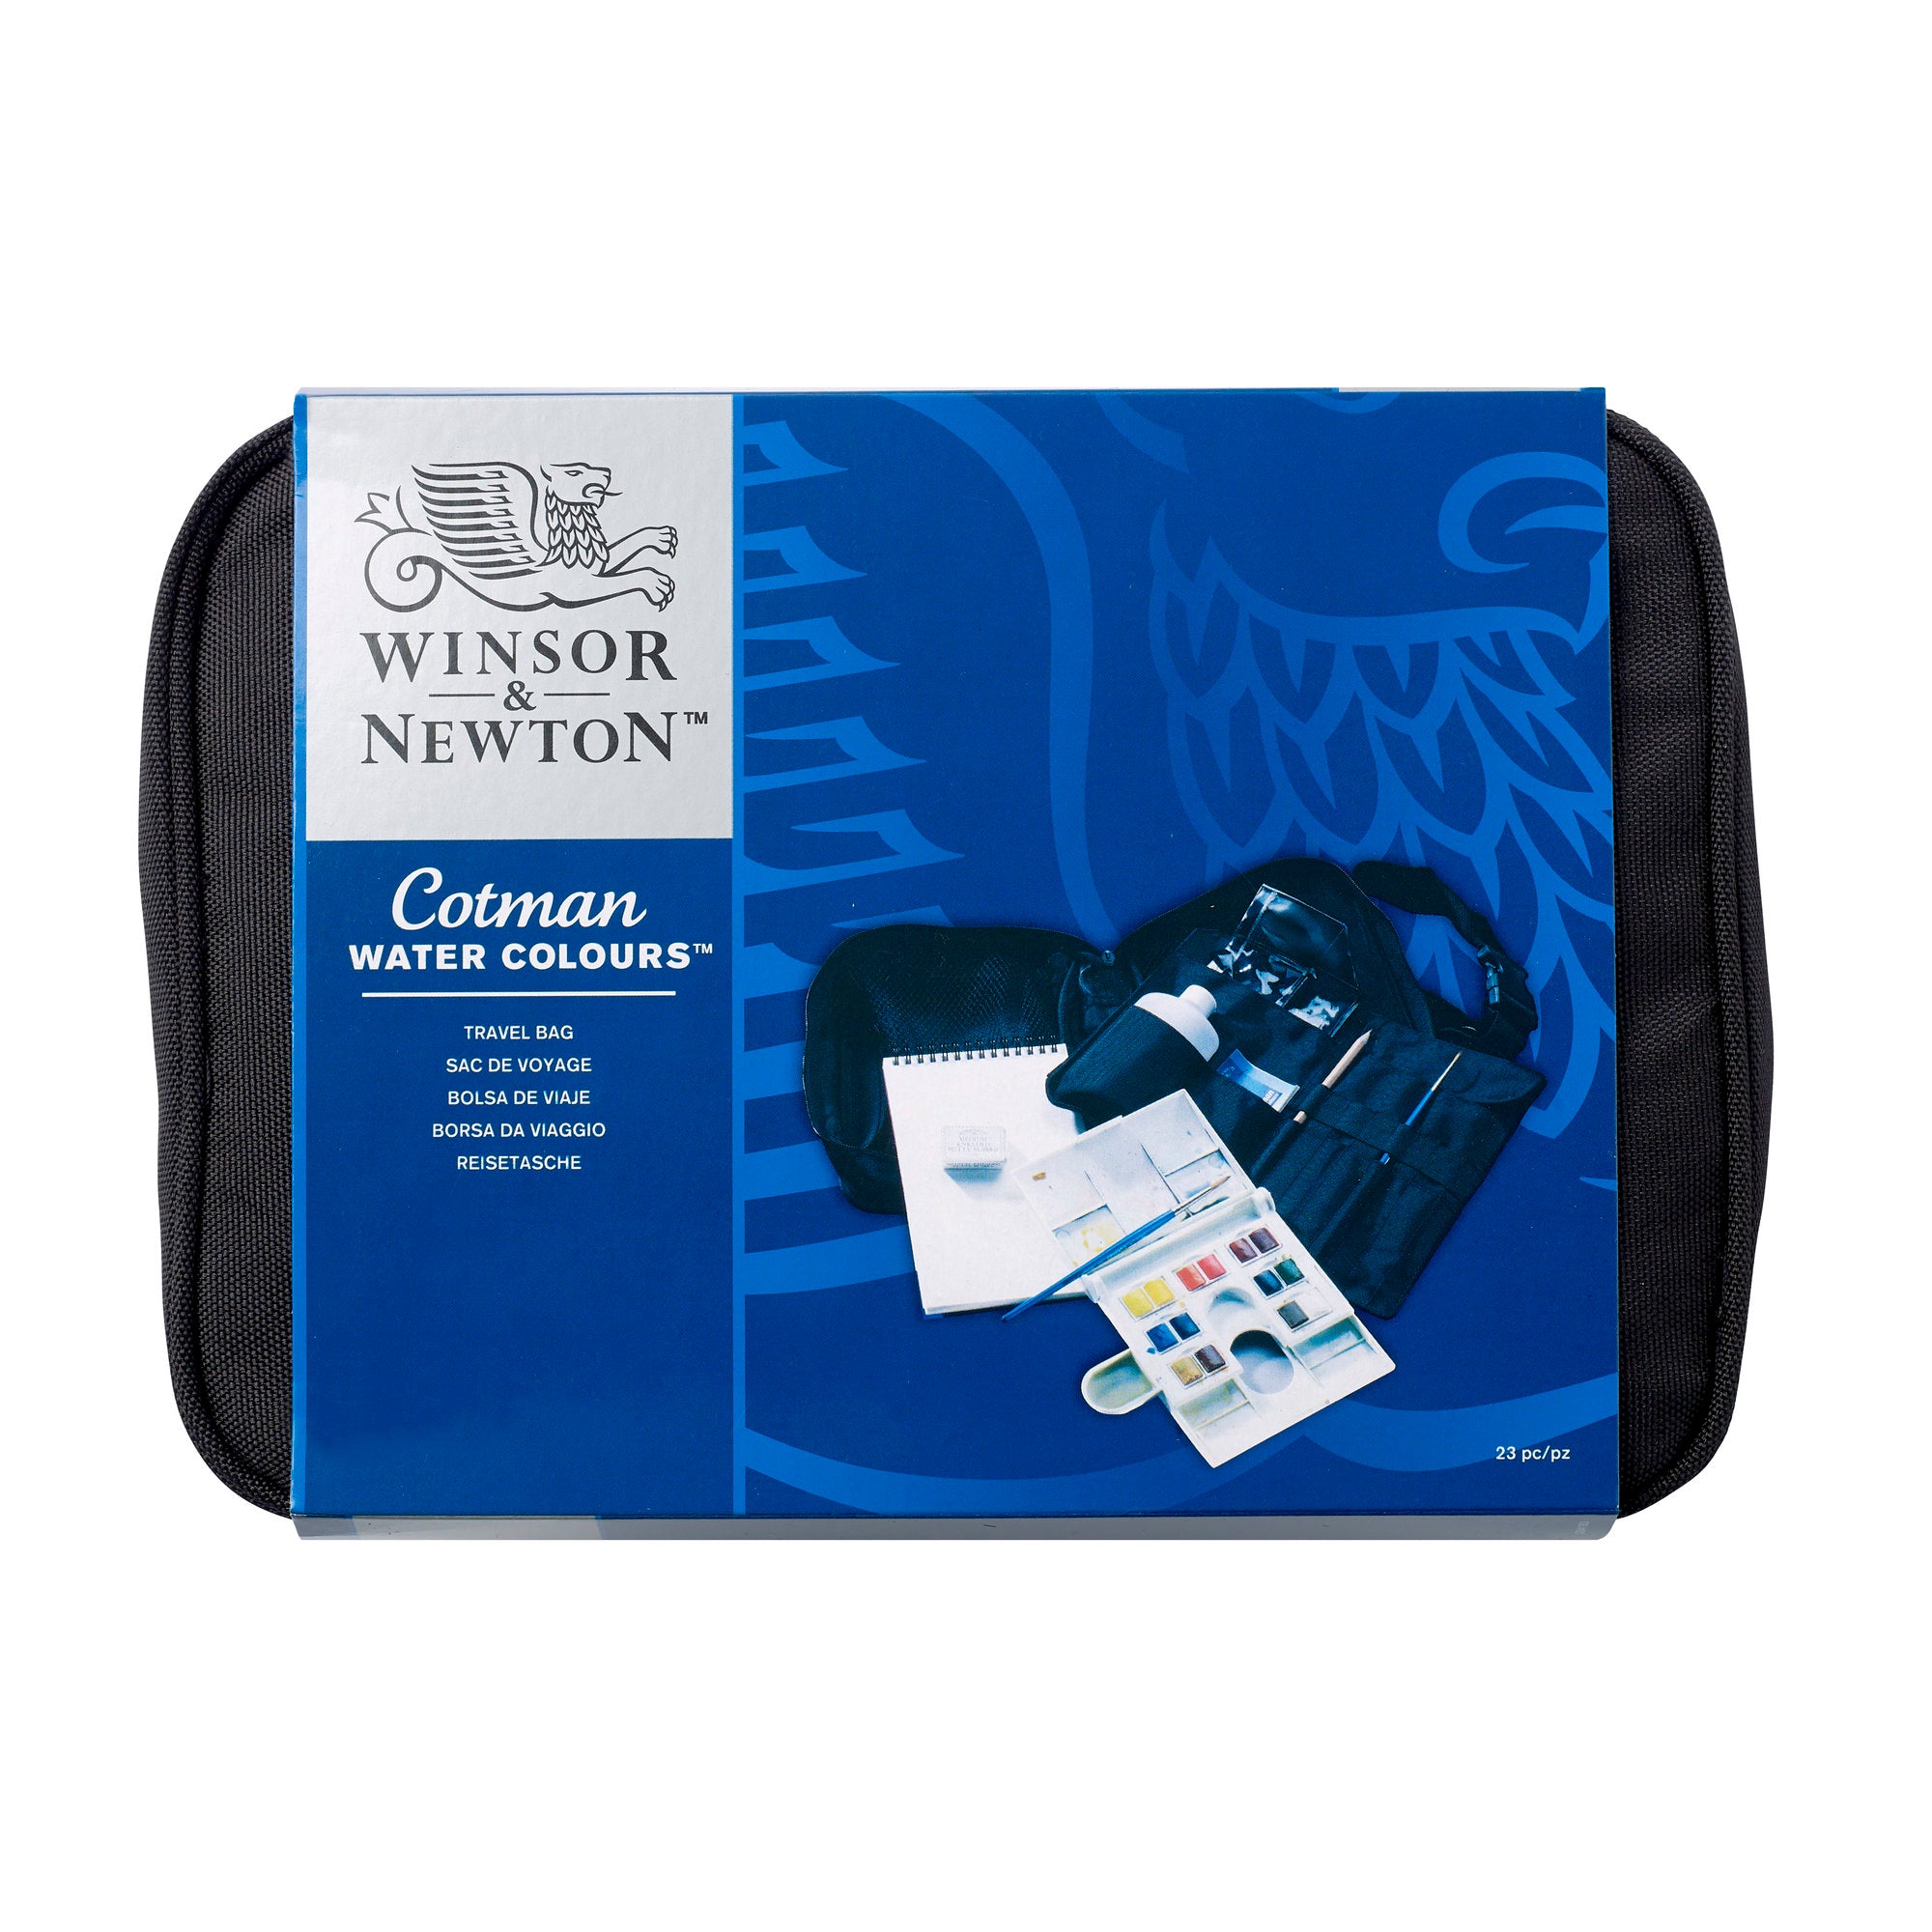 Winsor&Newton Cotman Water Colours Travelbag